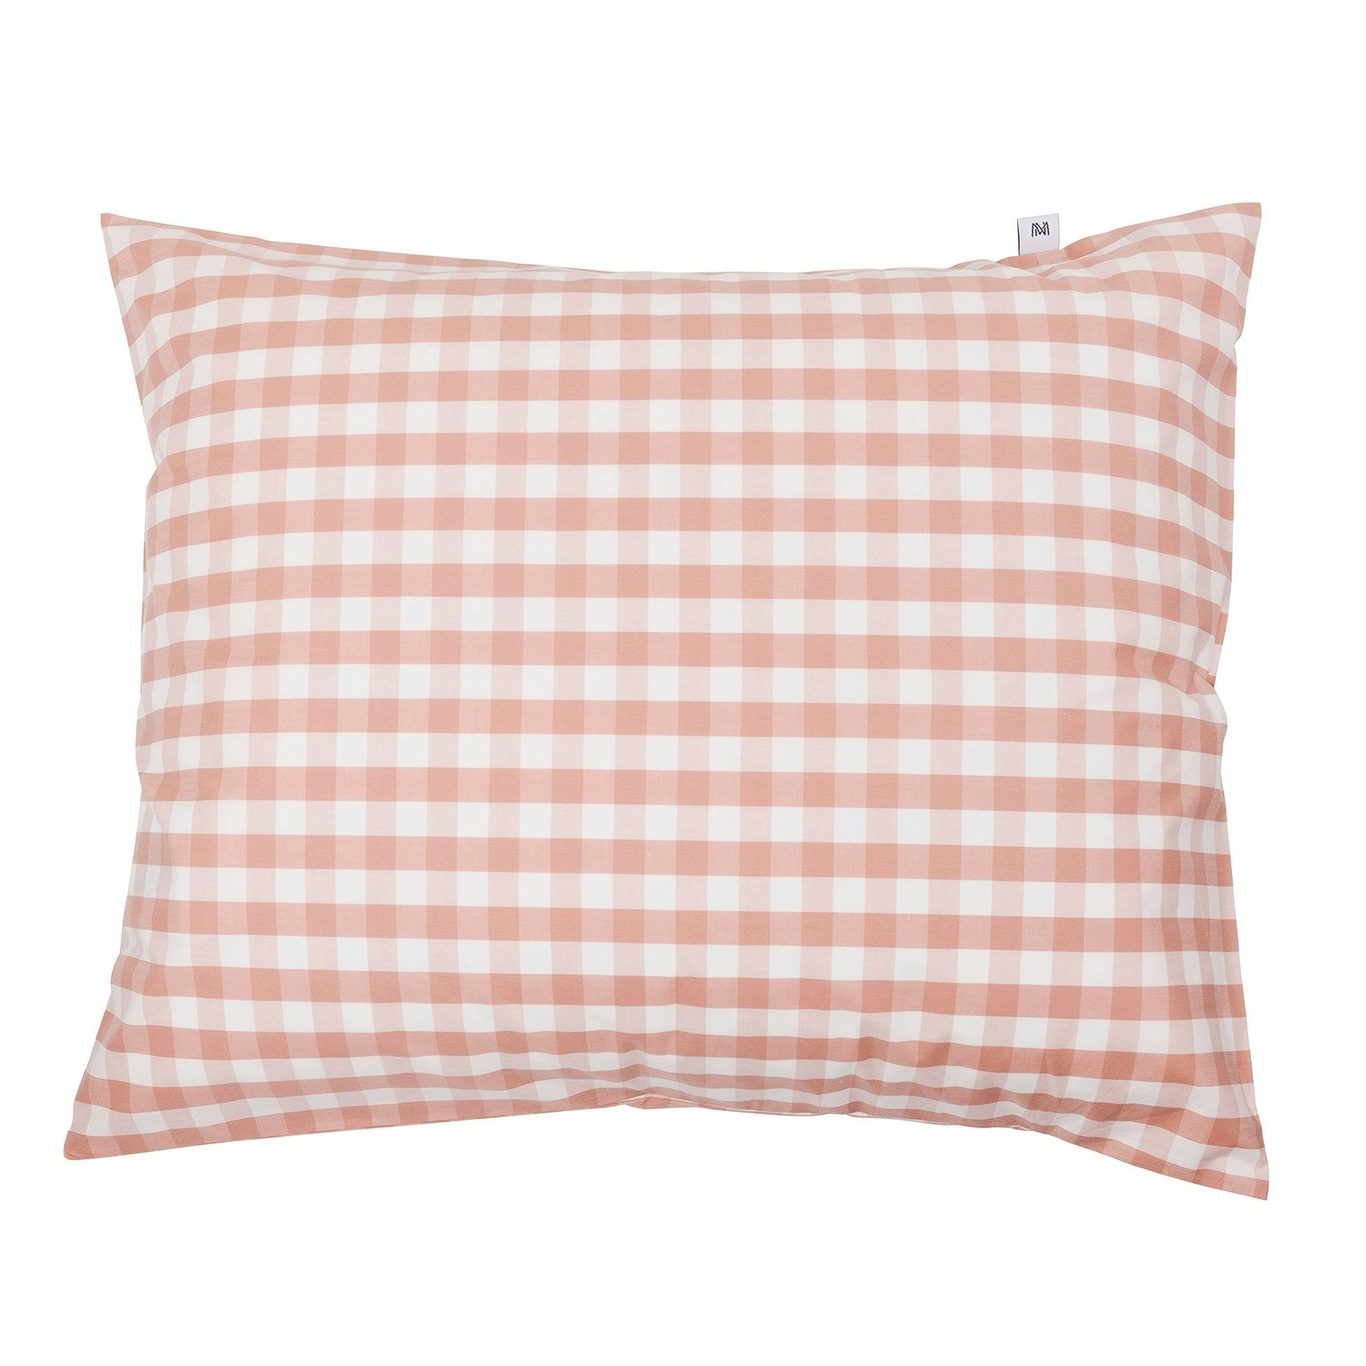 Casella Pillowcase 50x90 cm, Pink/Ivory